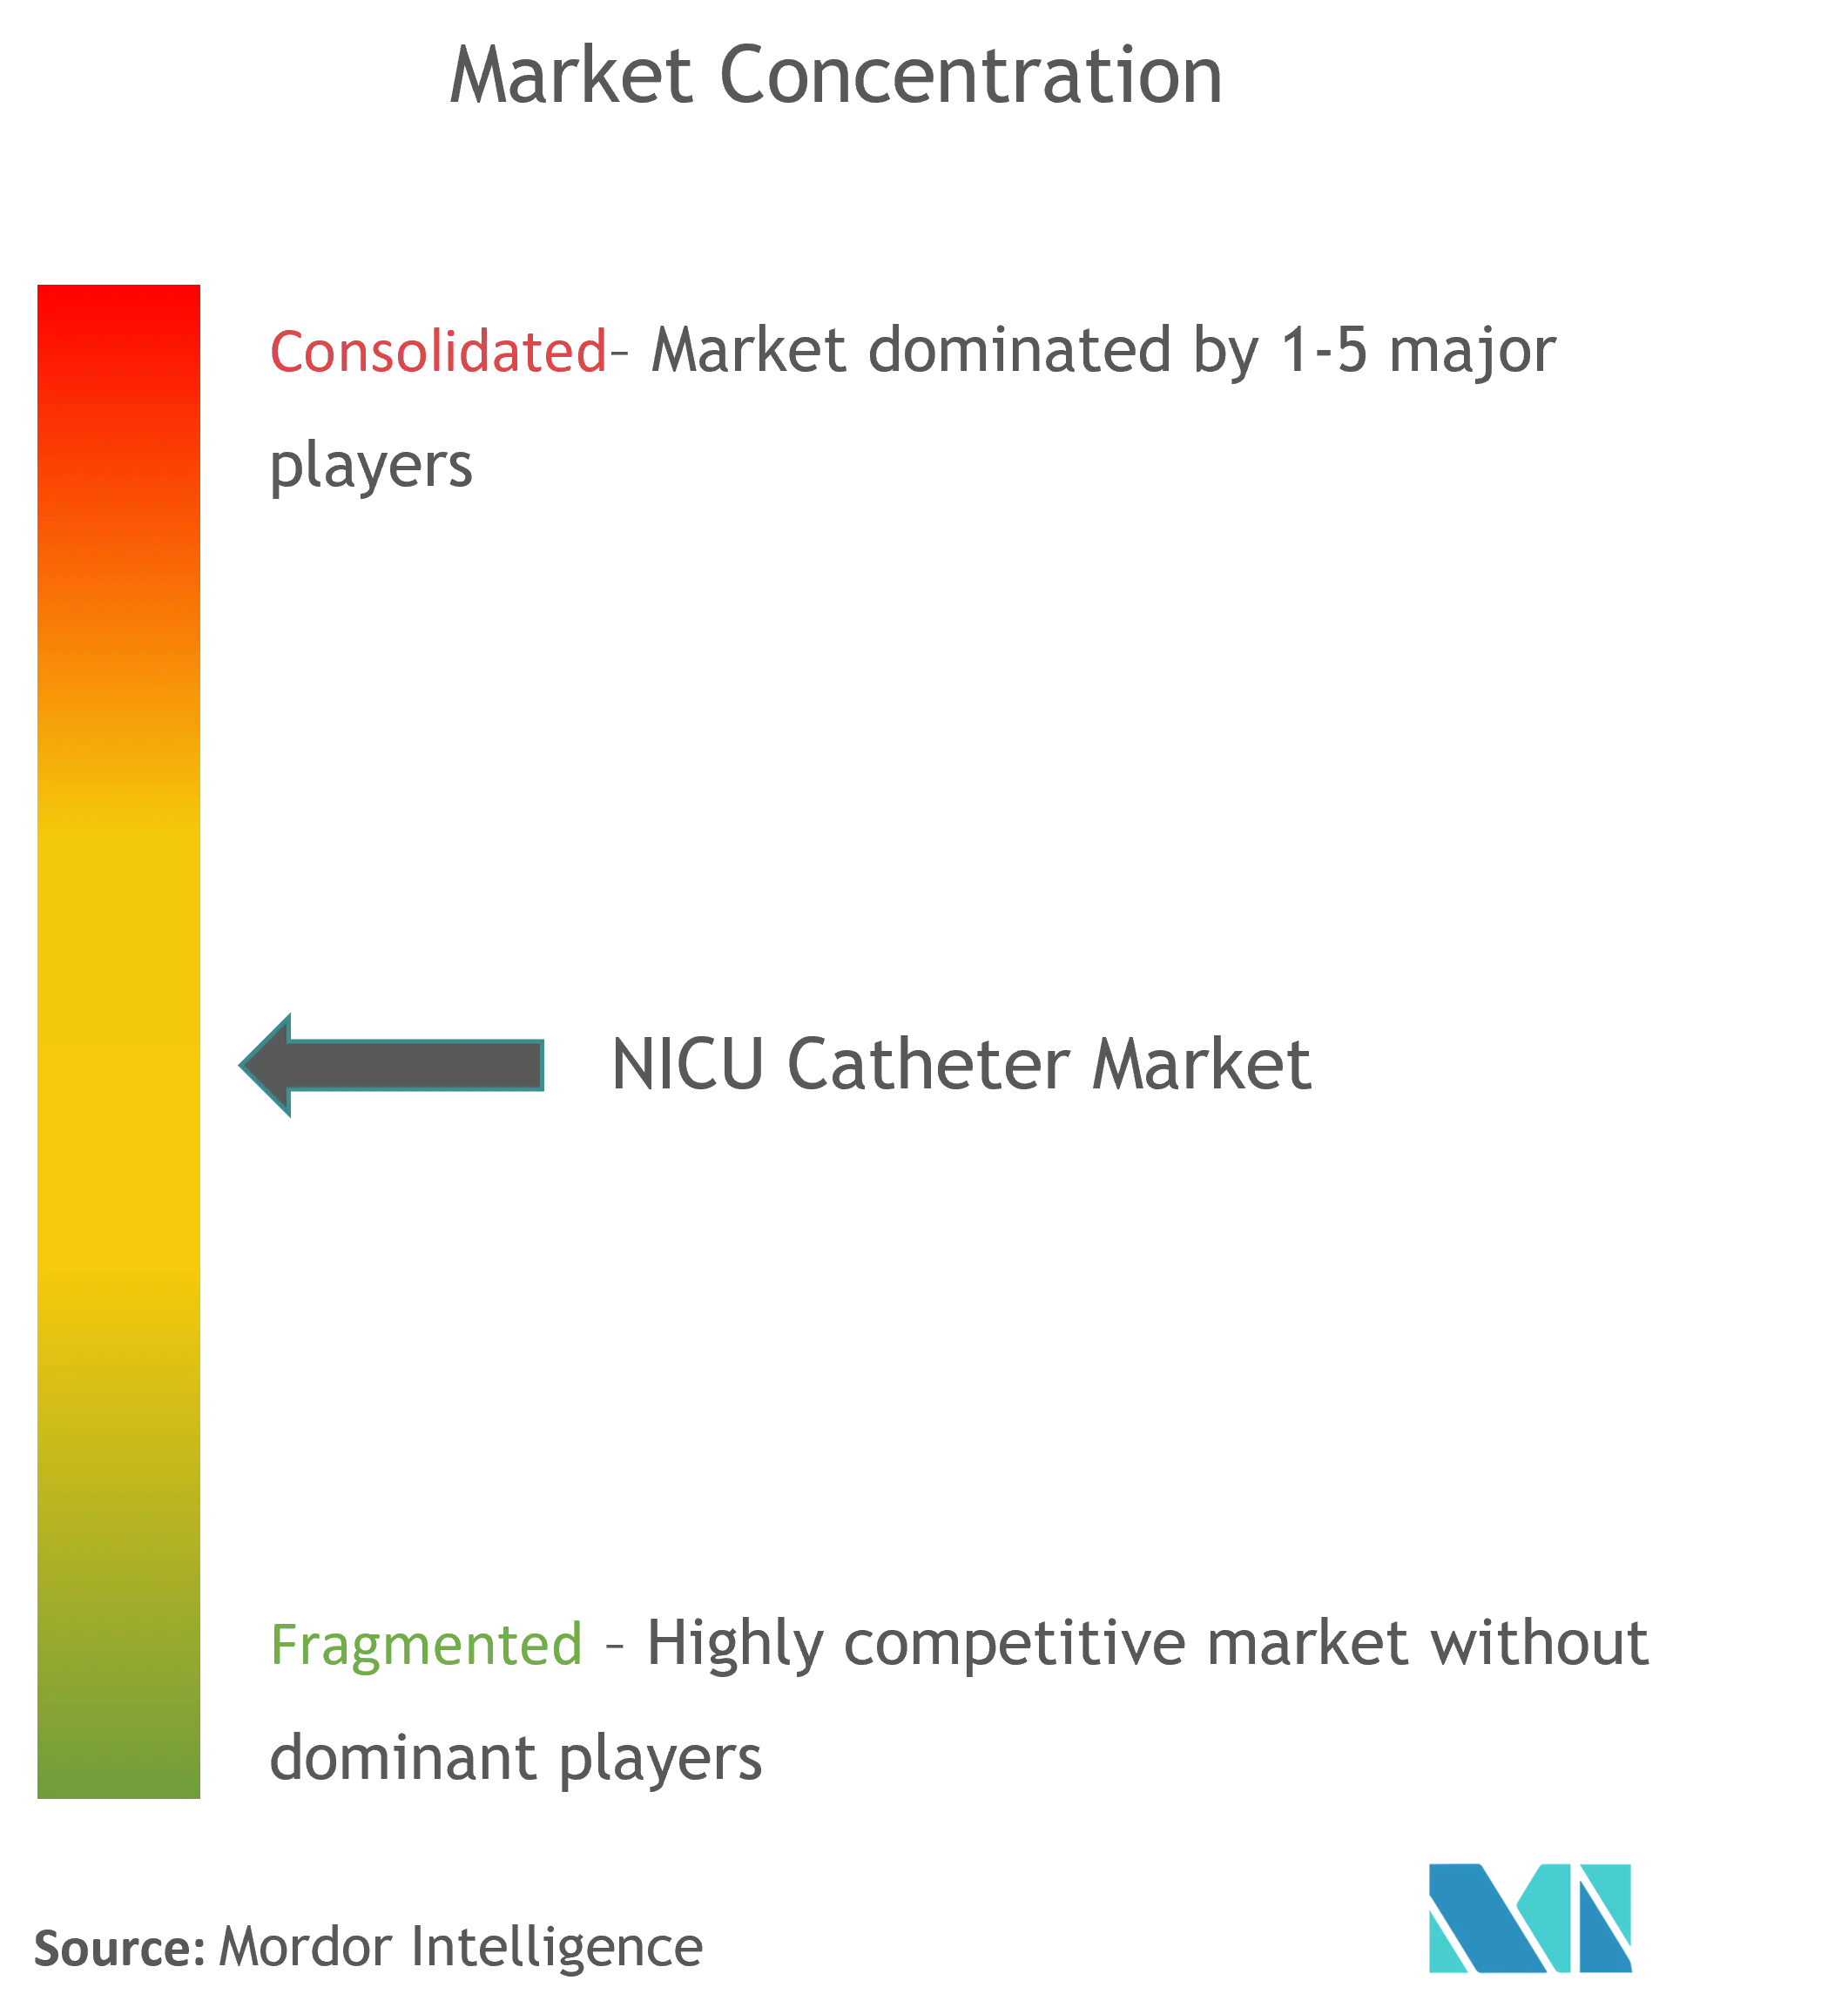 NICU Catheter Market Concentration